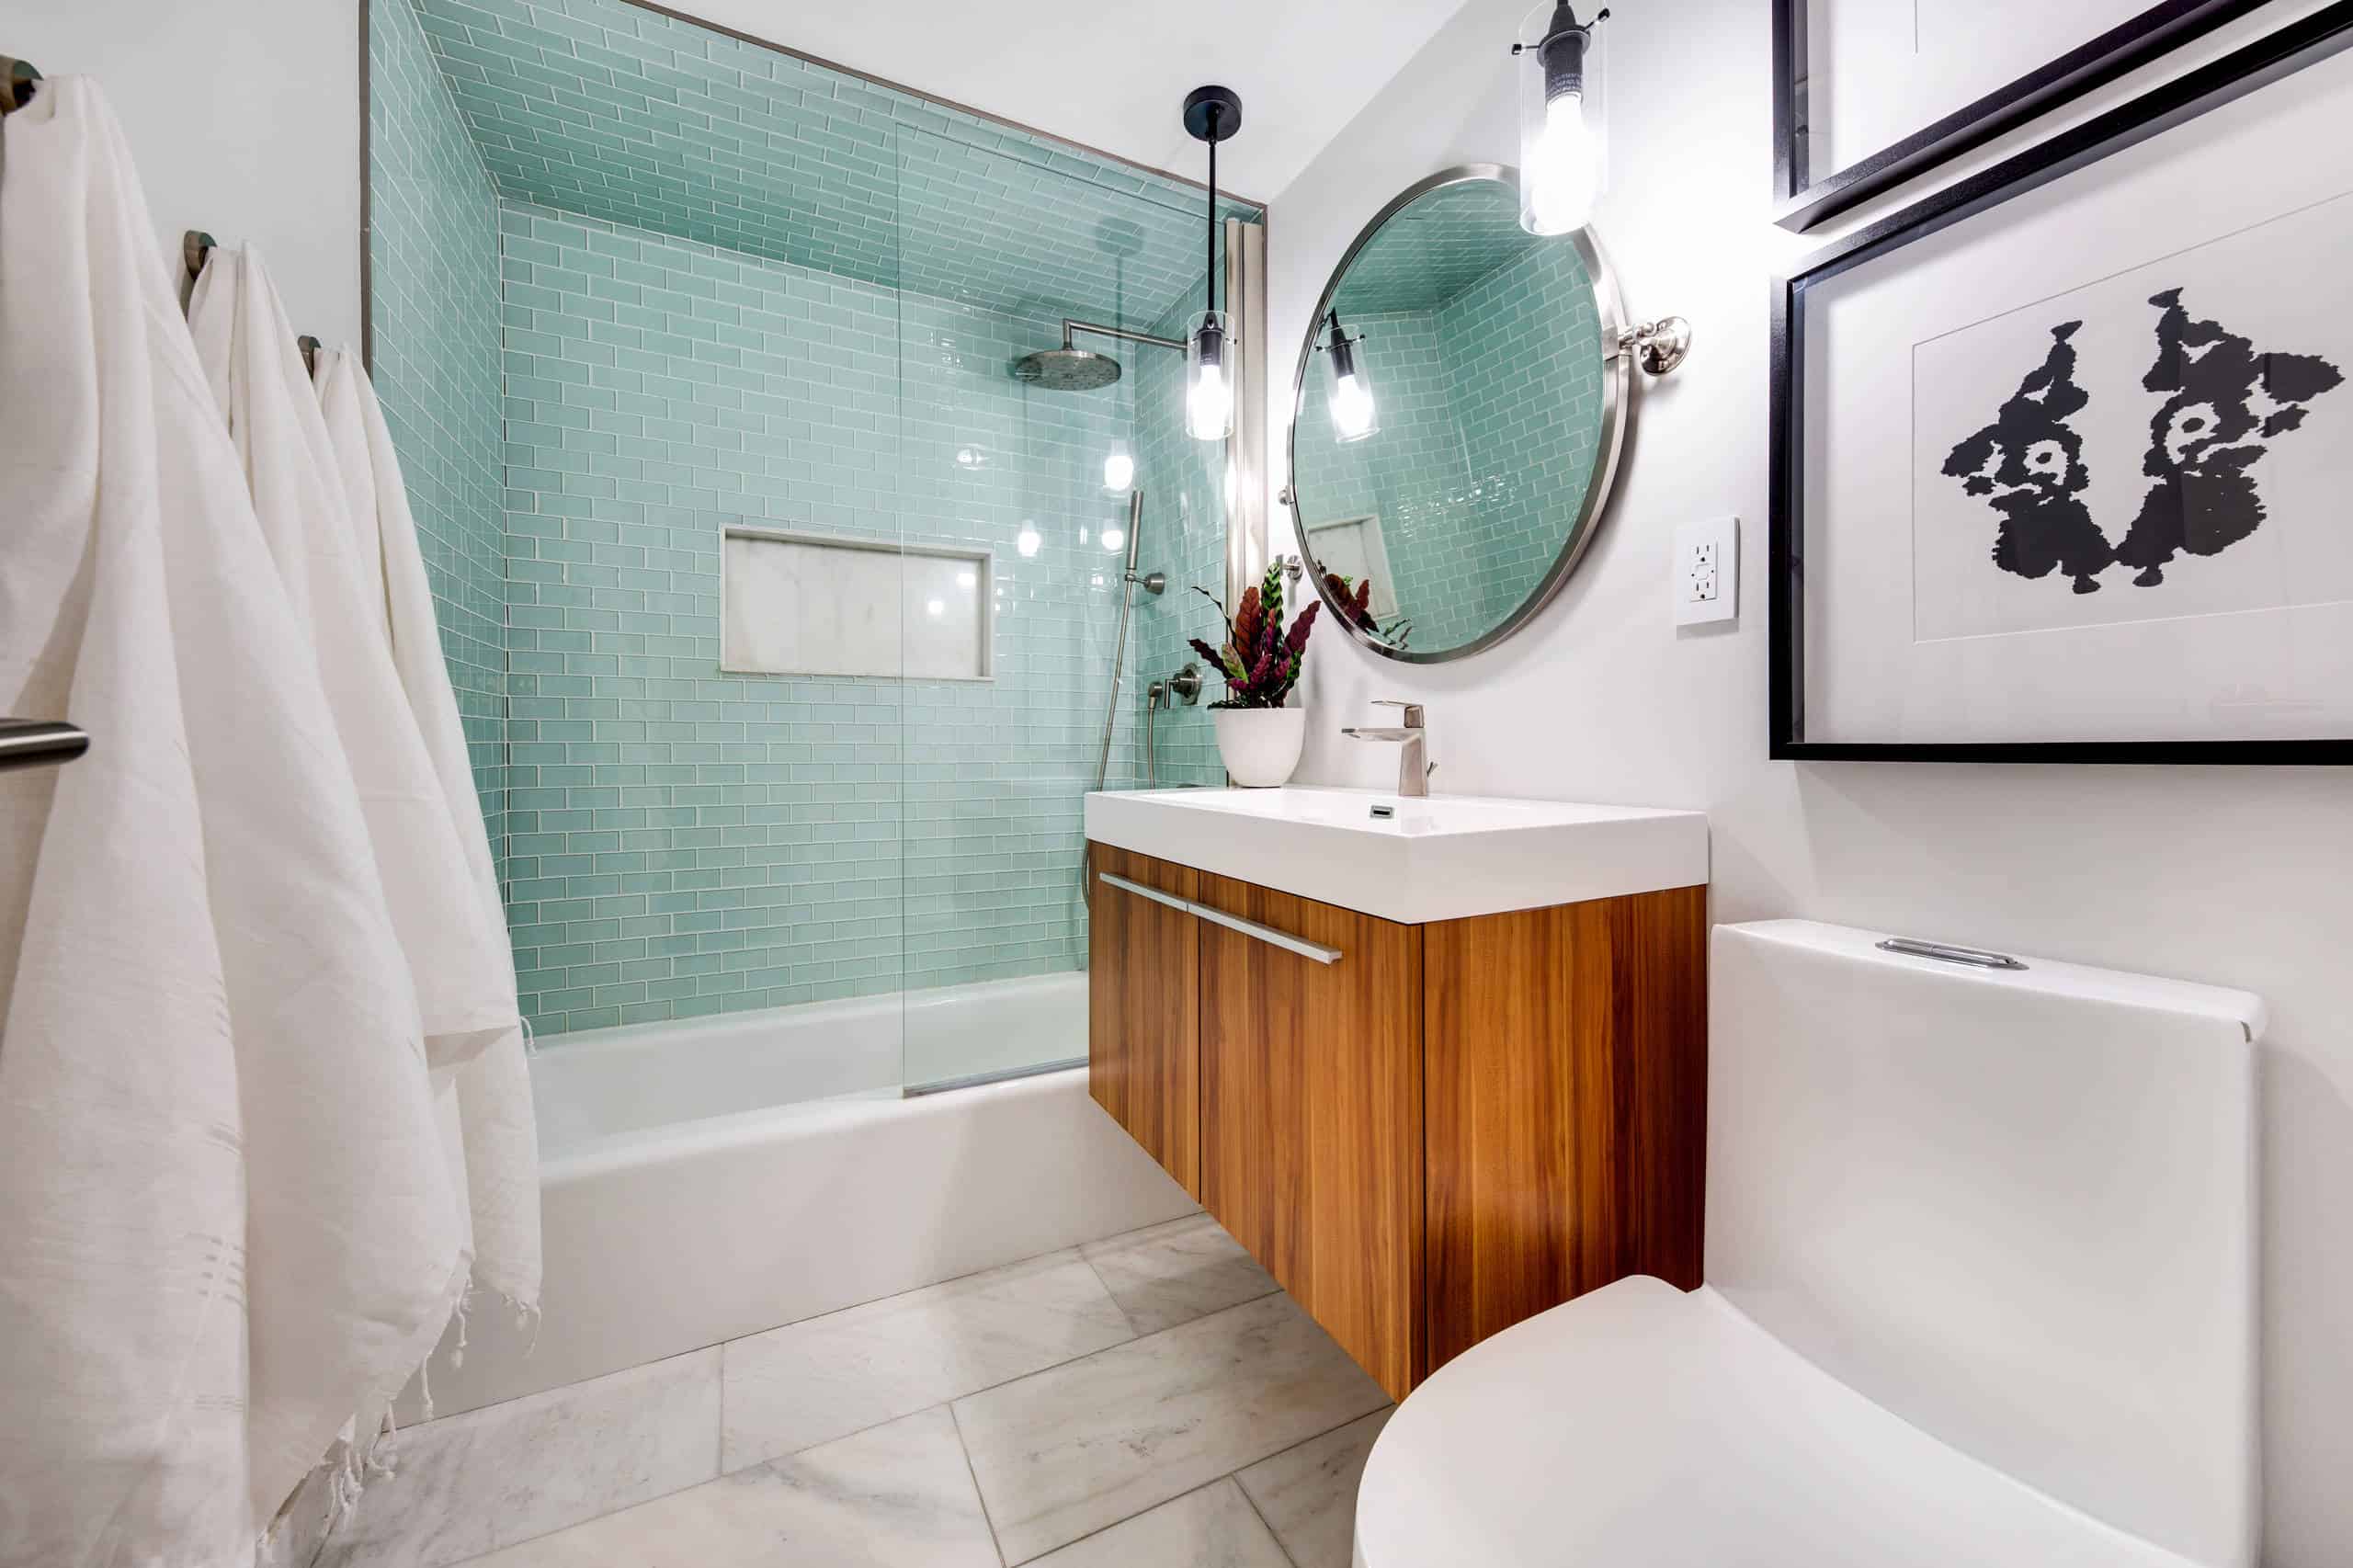 50 Inspiring Bathroom Design Ideas : Bathroom Wall Tile Ideas ... - 02 Small Bathroom Showers Decorsnob 1